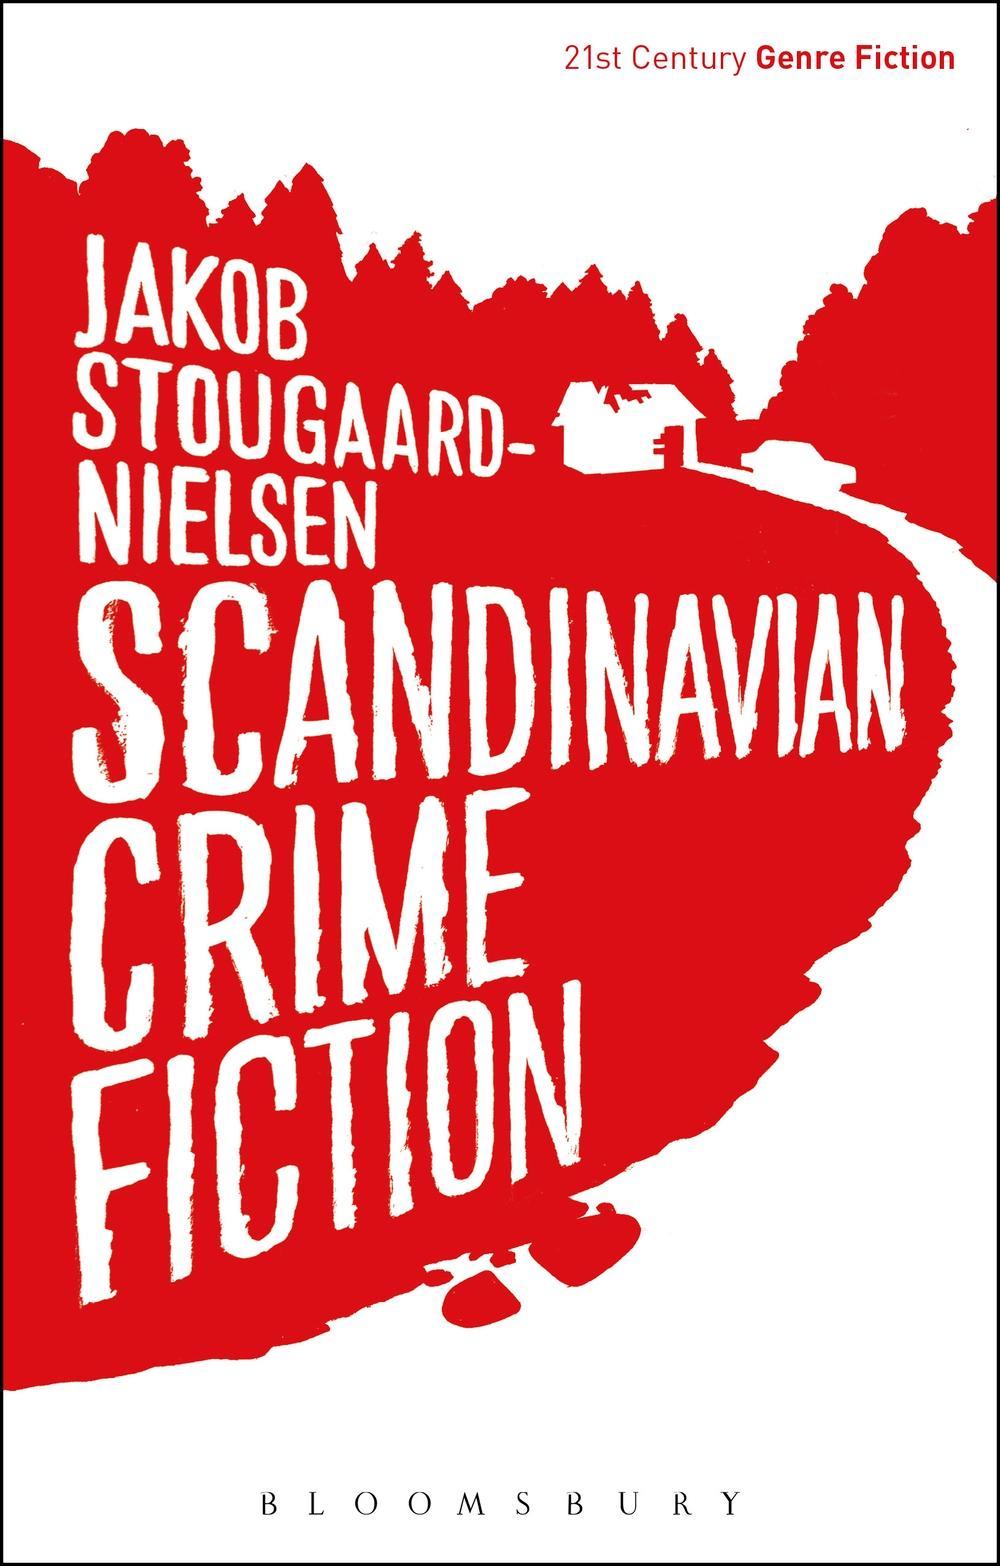 Scandinavian Crime Fiction - Jakob Stougaard Nielsen